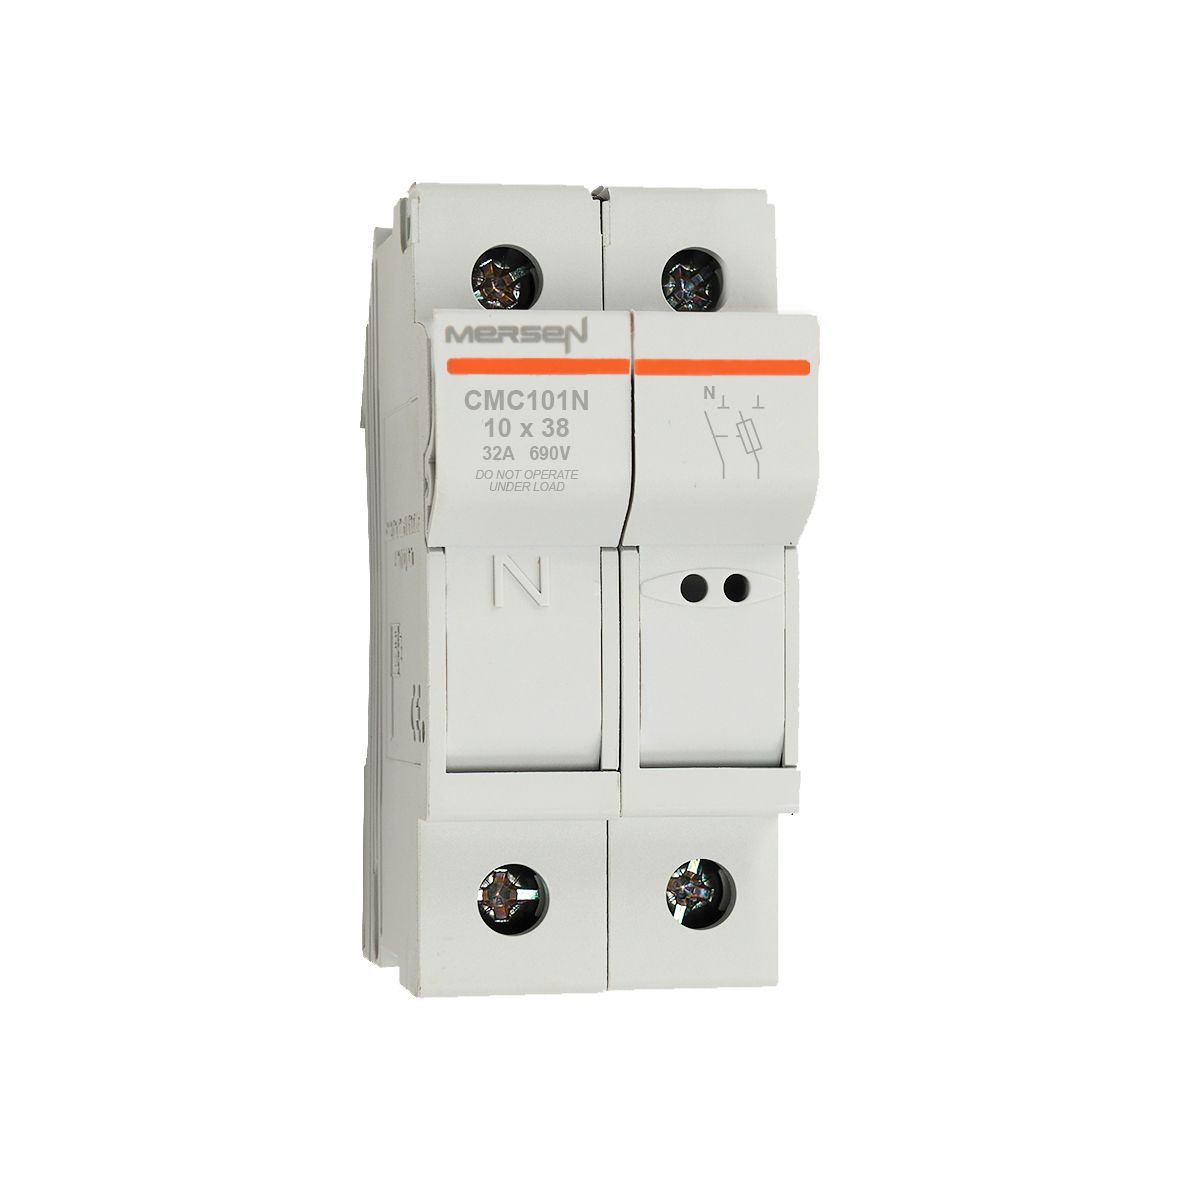 G1062698 - CMC10 modular fuse holder, IEC, 1P+N, 10x38, DIN rail mounting, IP20